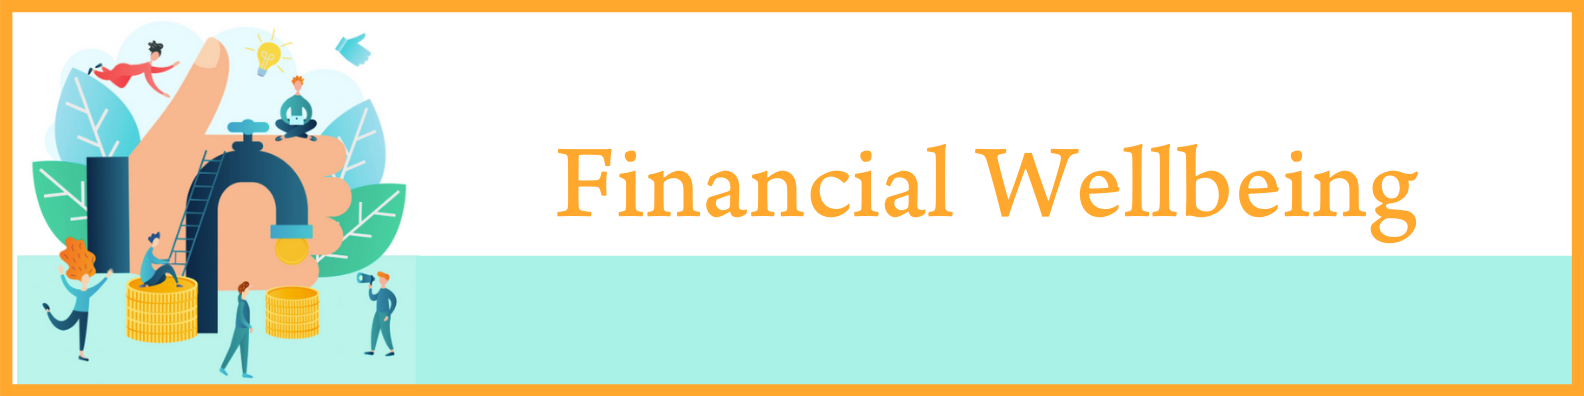 Financial Wellbeing Banner